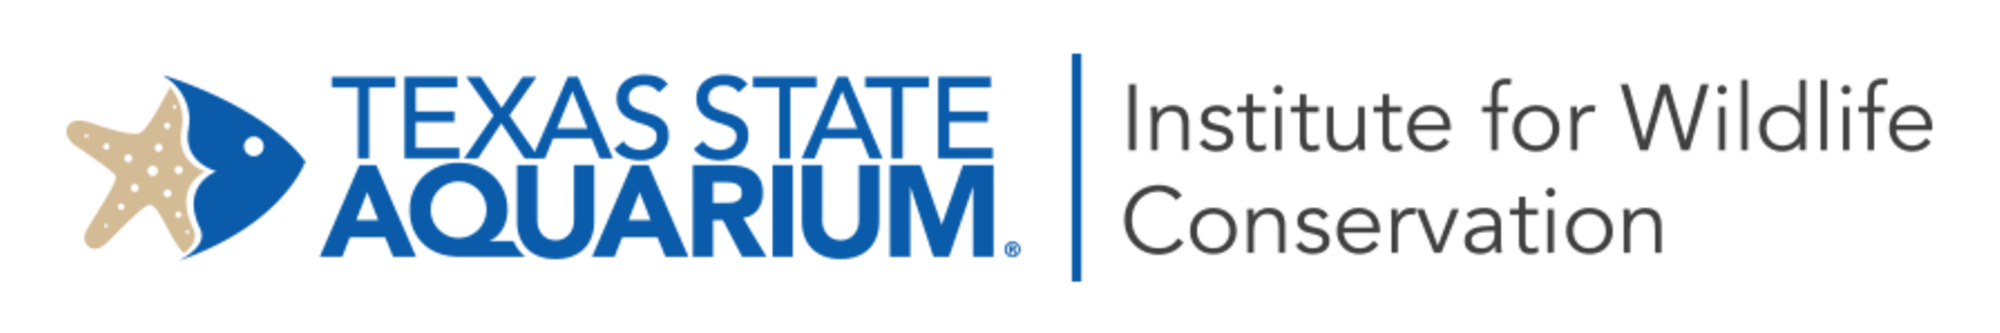 Texas State Aquarium logo next to gray text reading, "Institute for Wildlife Conservation"